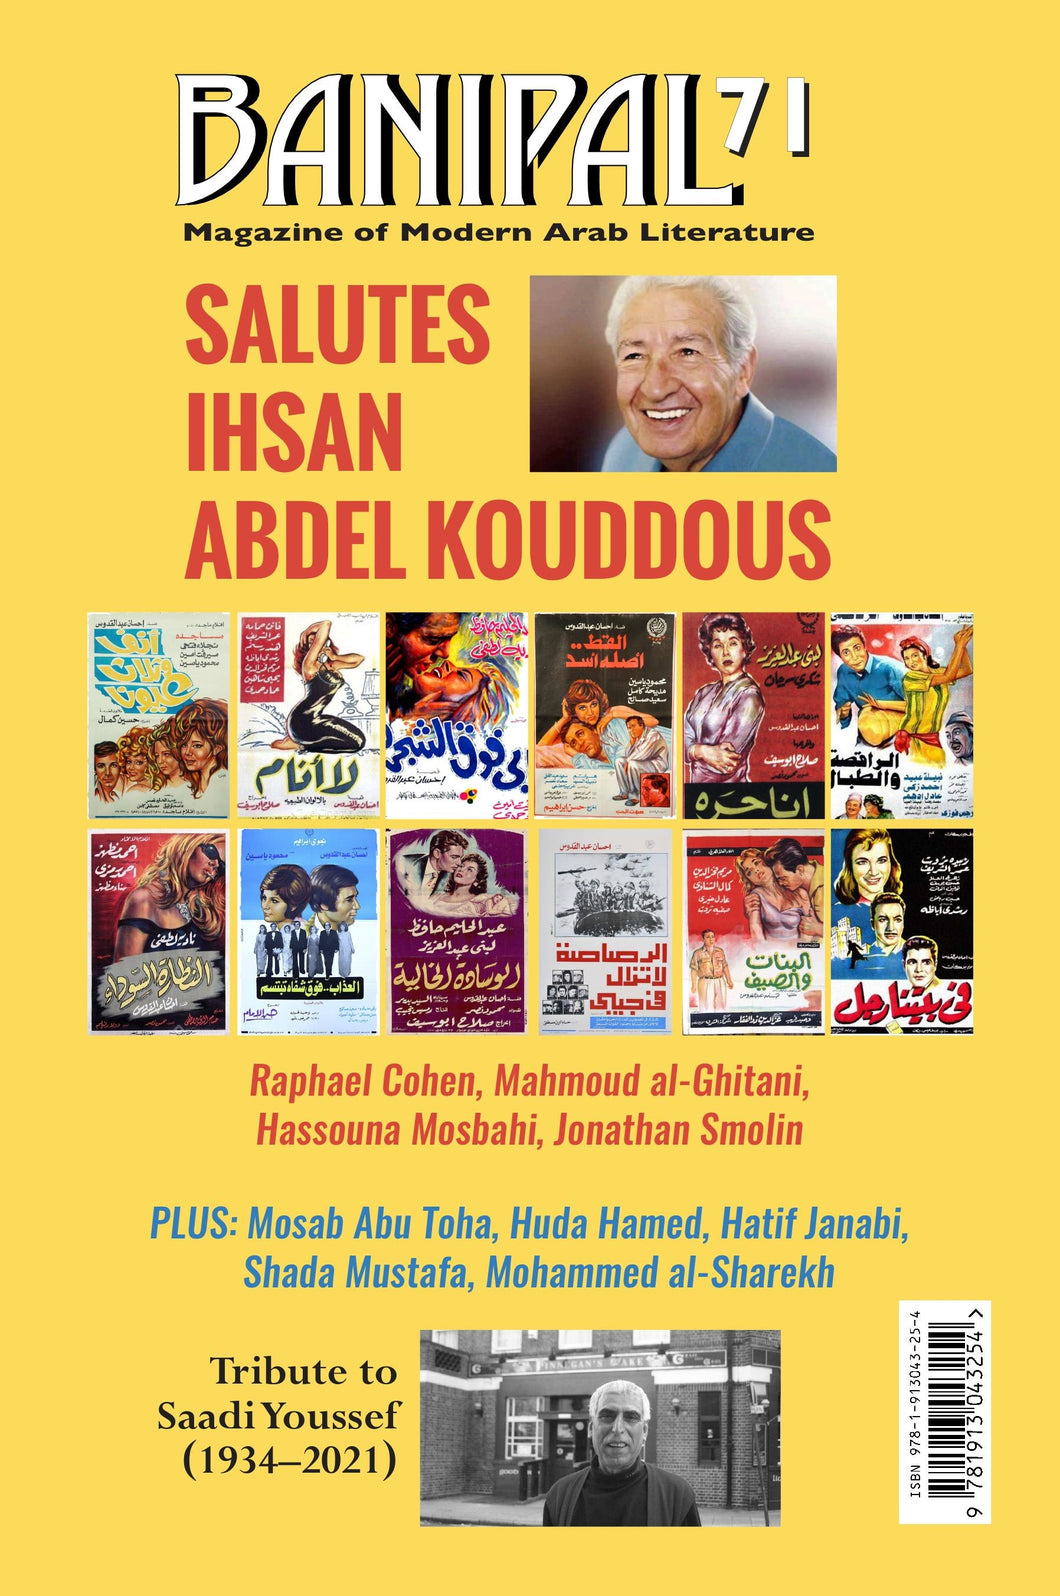 Banipal 71 Salutes Ihsan Abdel Kouddous